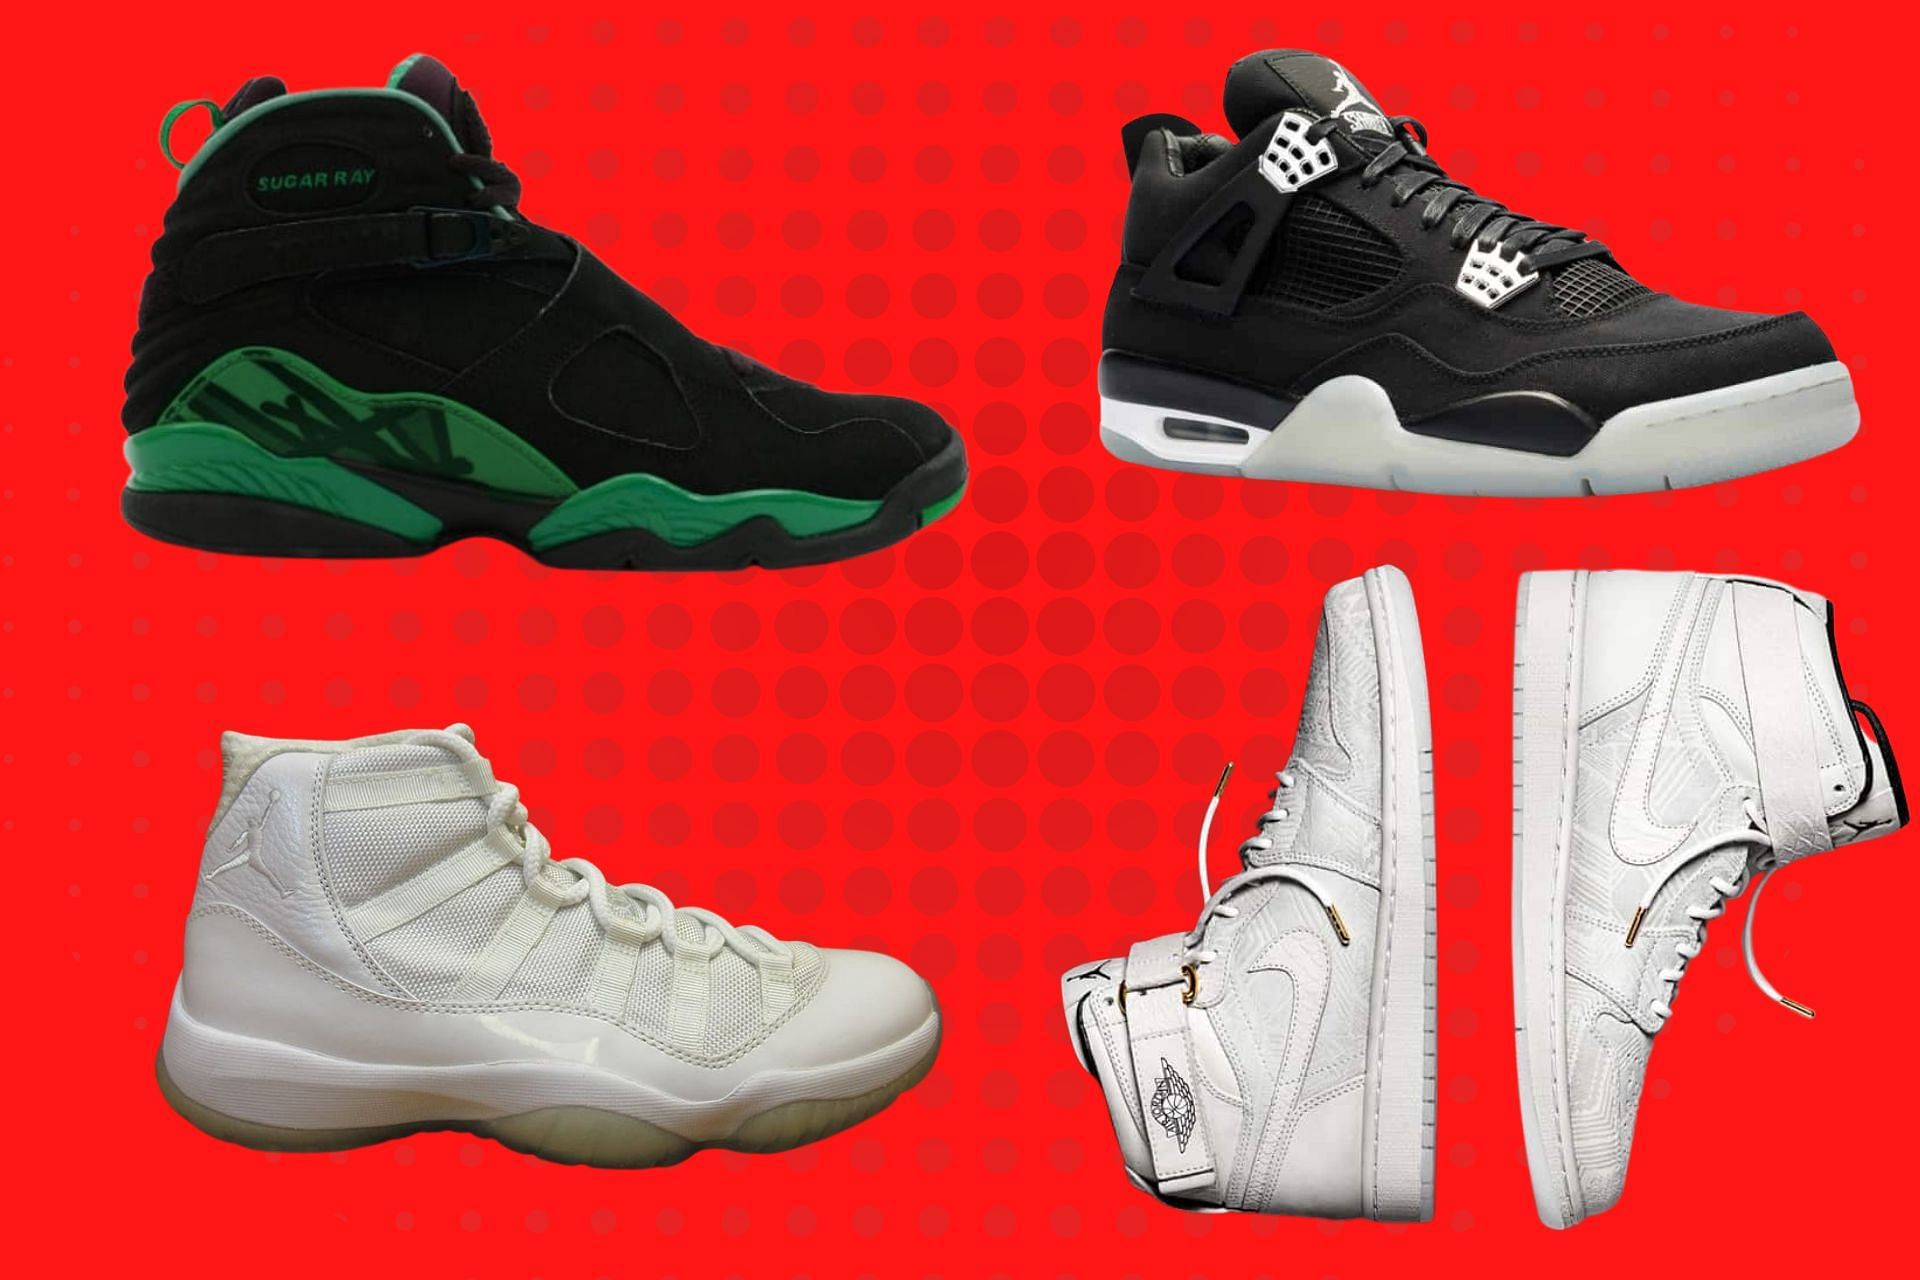 Jordan, Shoes, Rare Special Limited Edition Jordan 4s